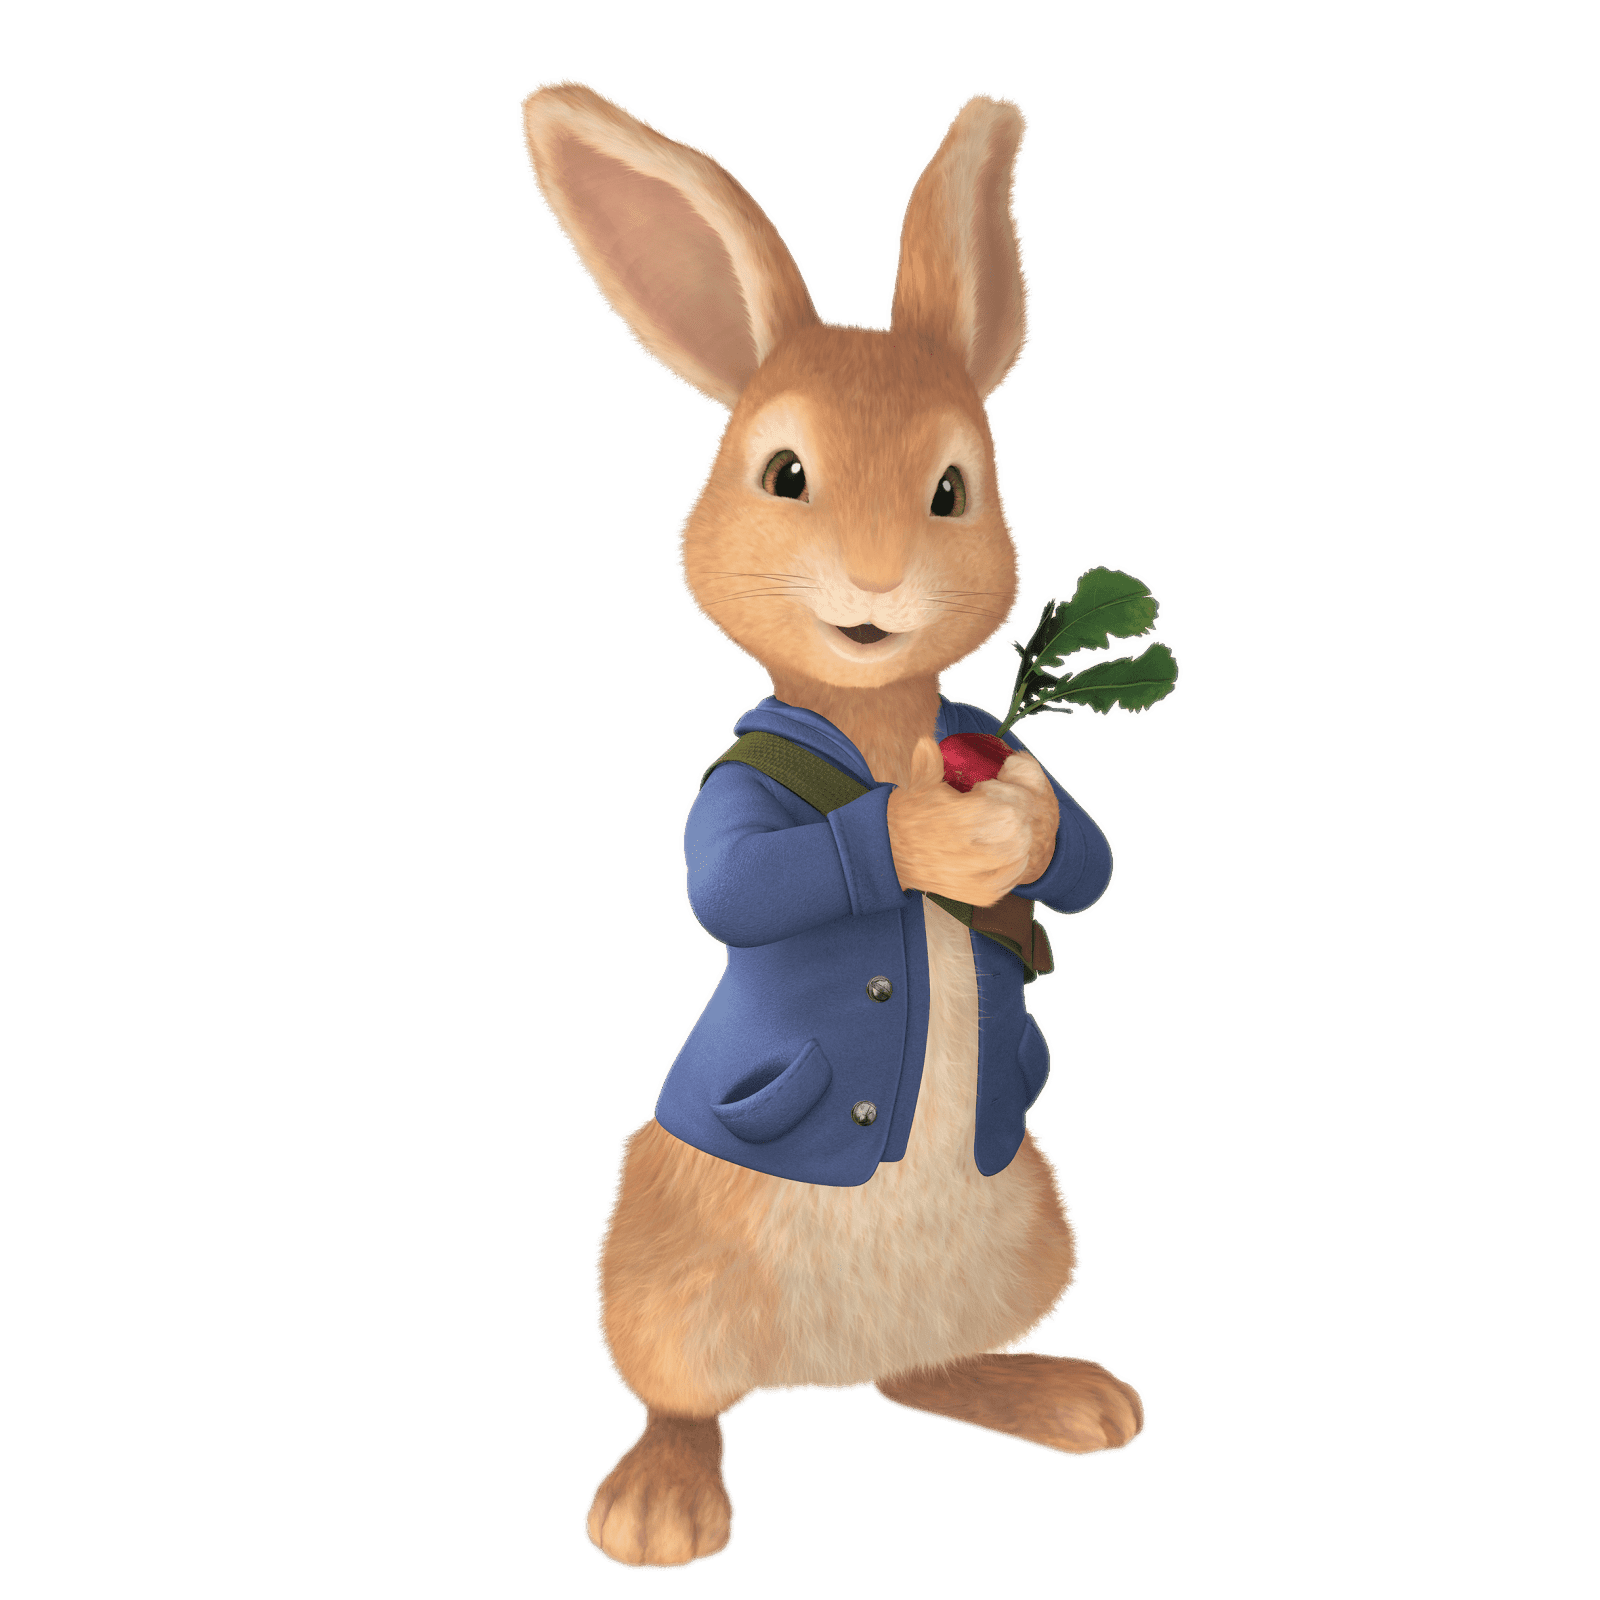 Printable Peter Rabbit Characters